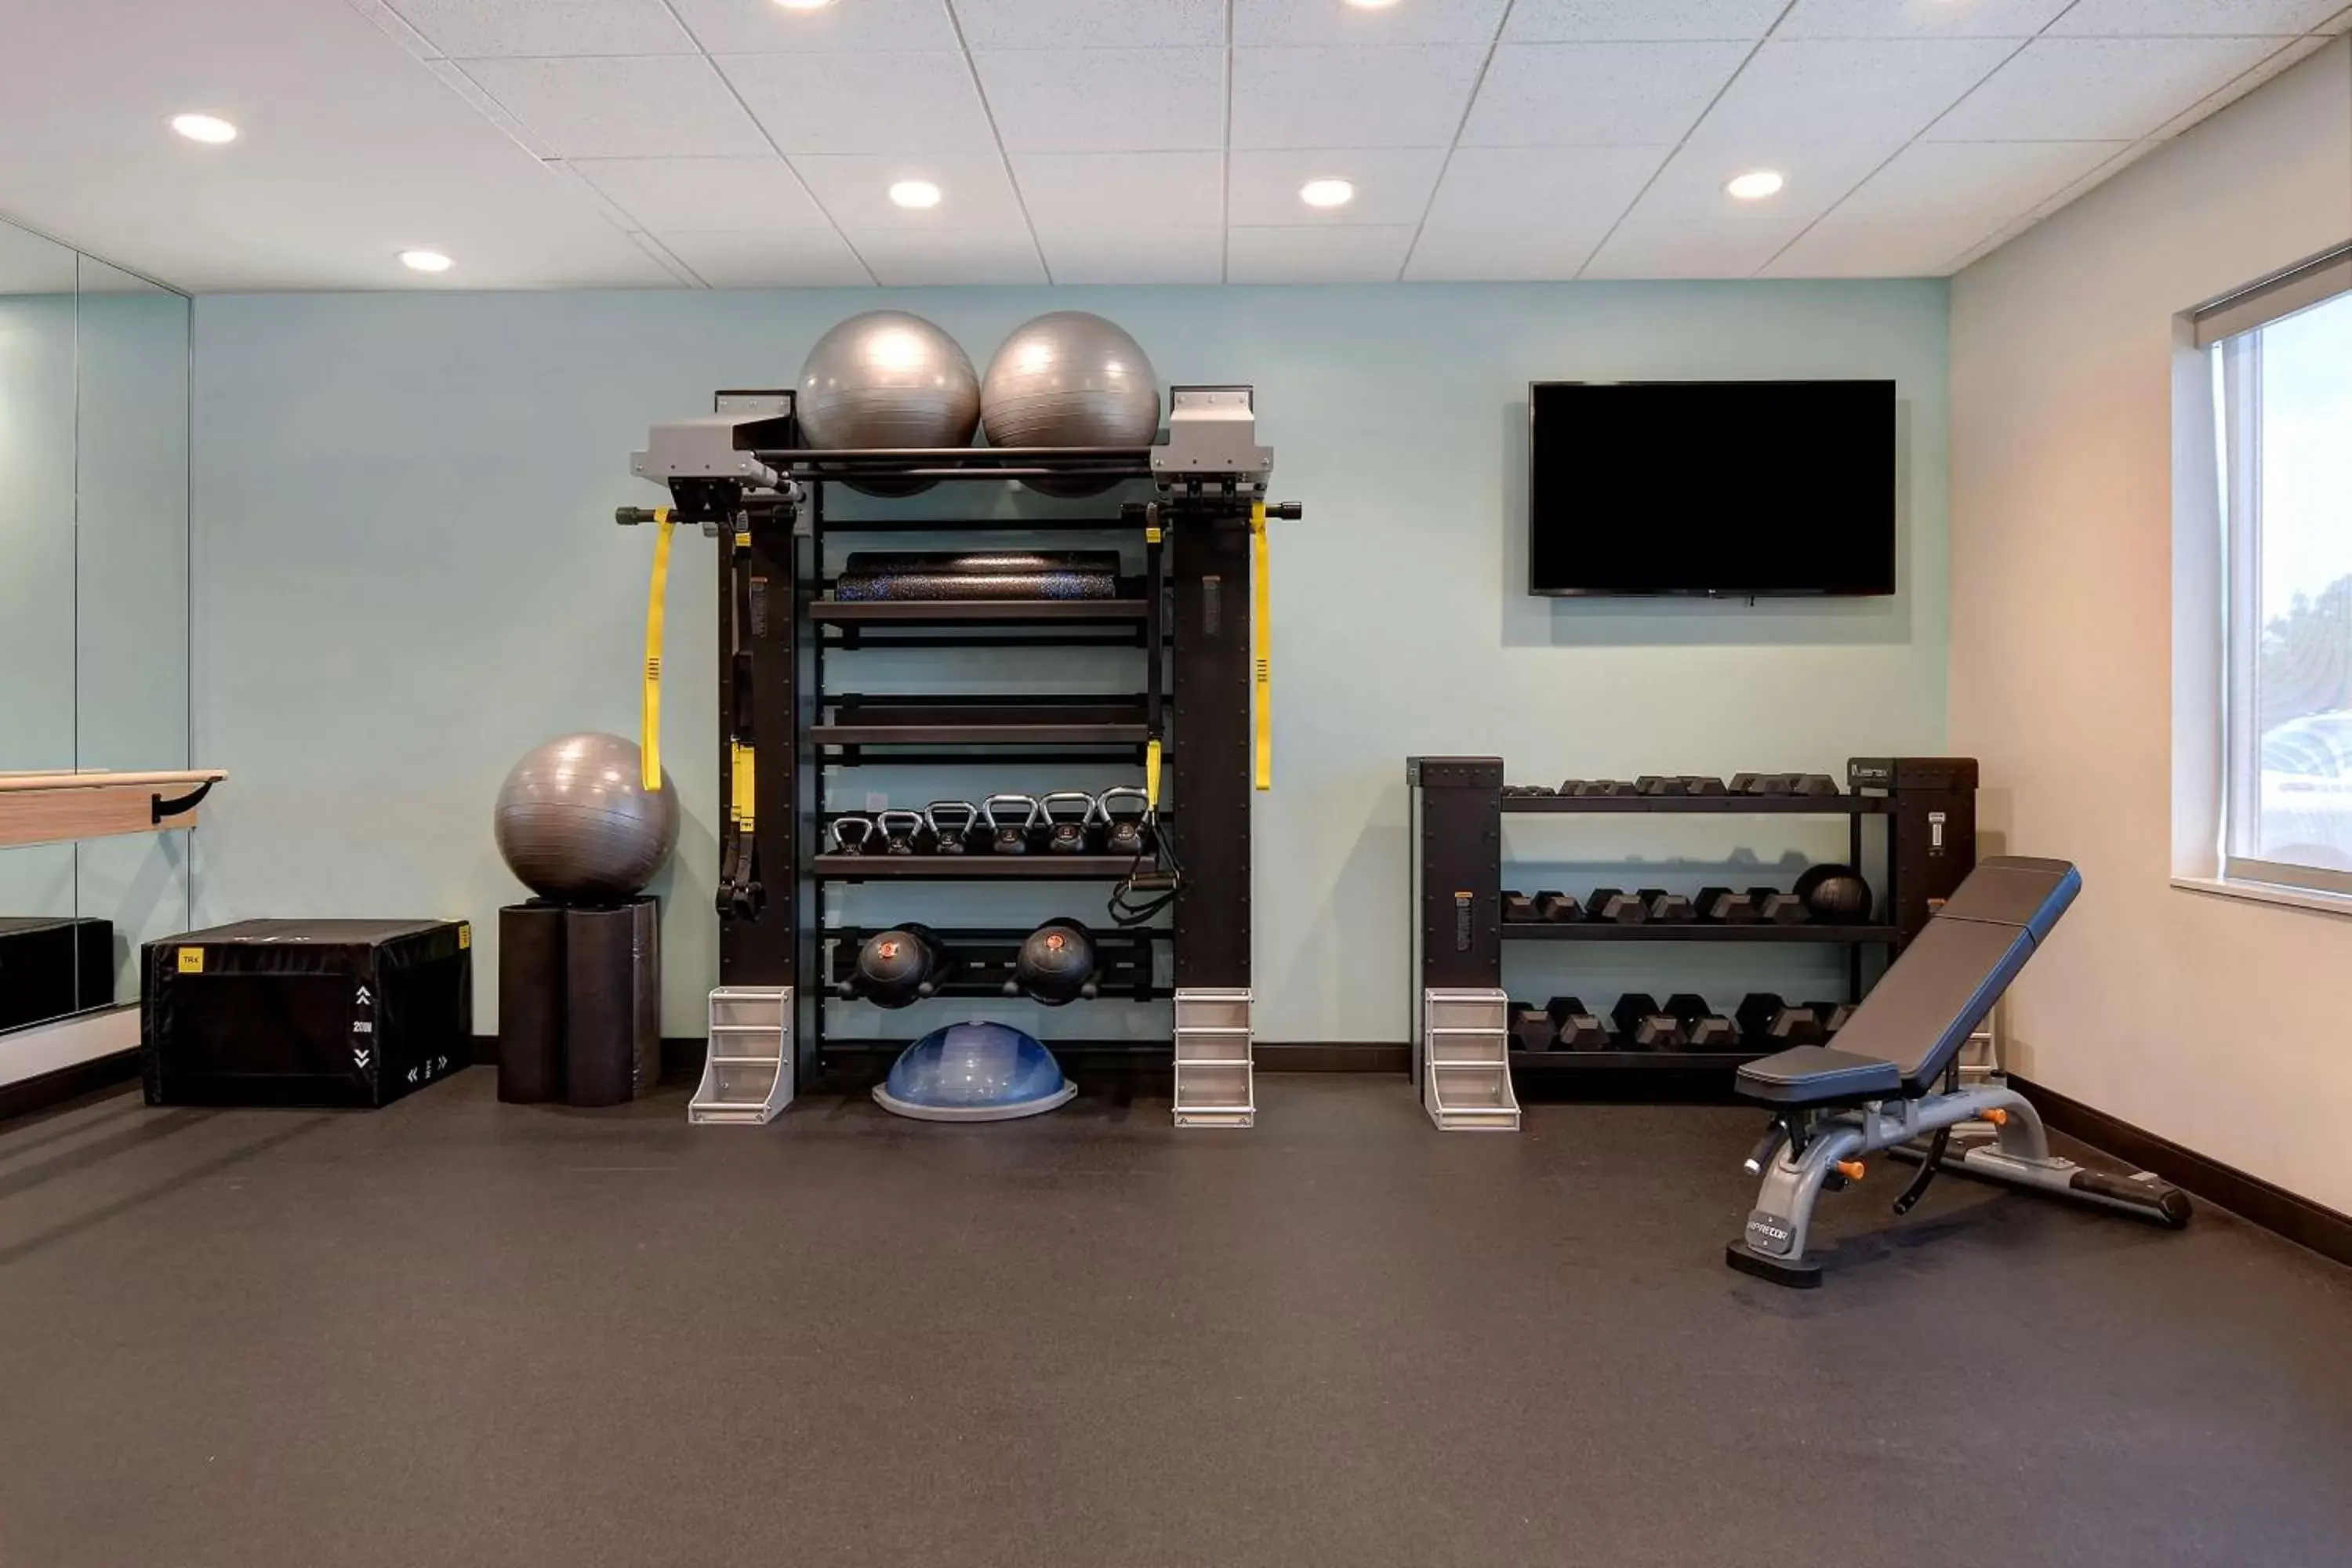 Fitness centre/facilities, Fitness Center/Facilities in Tru By Hilton Macon North, Ga